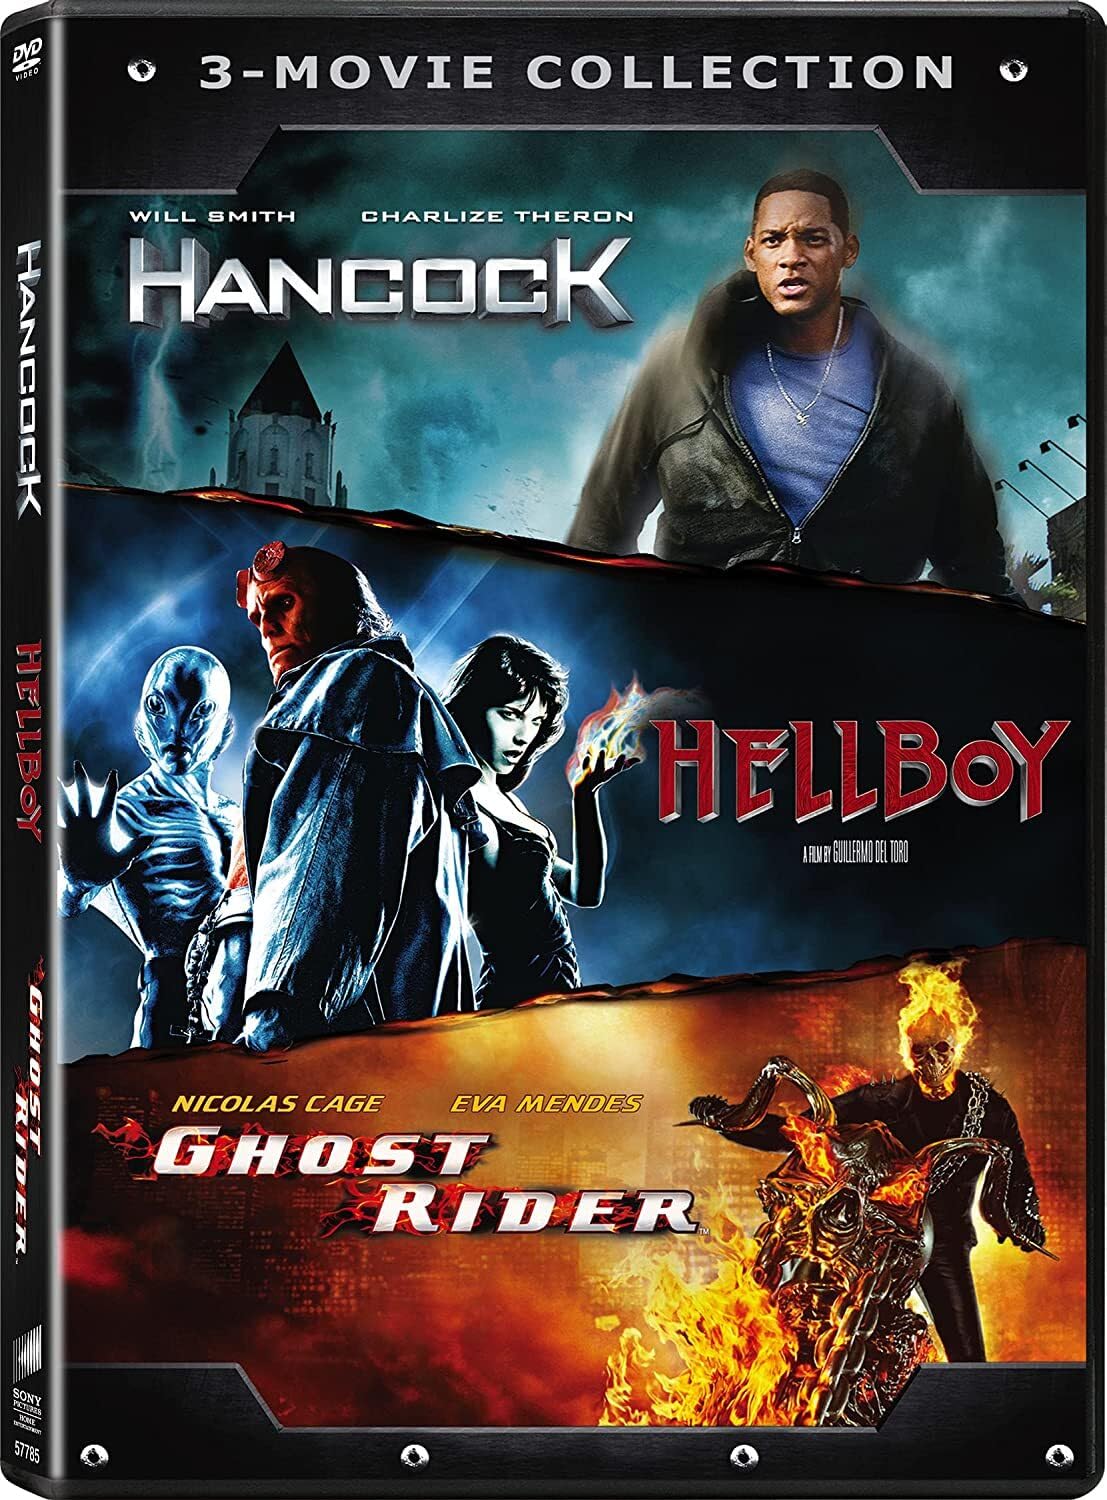 Ghost Rider (2007) / Hancock / Hellboy (2004) - Set